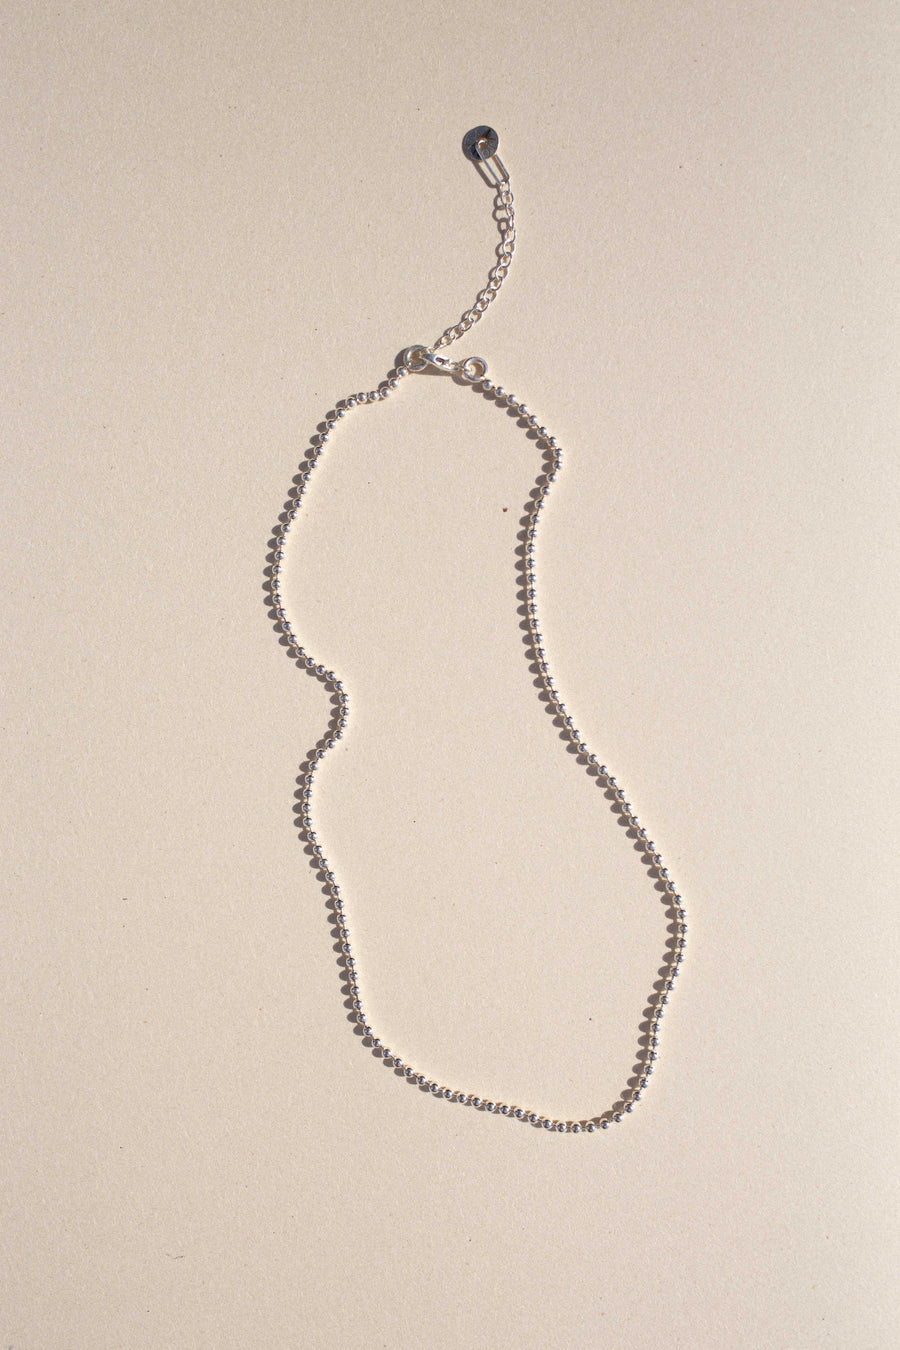 SAMSA Silver Spark Necklace